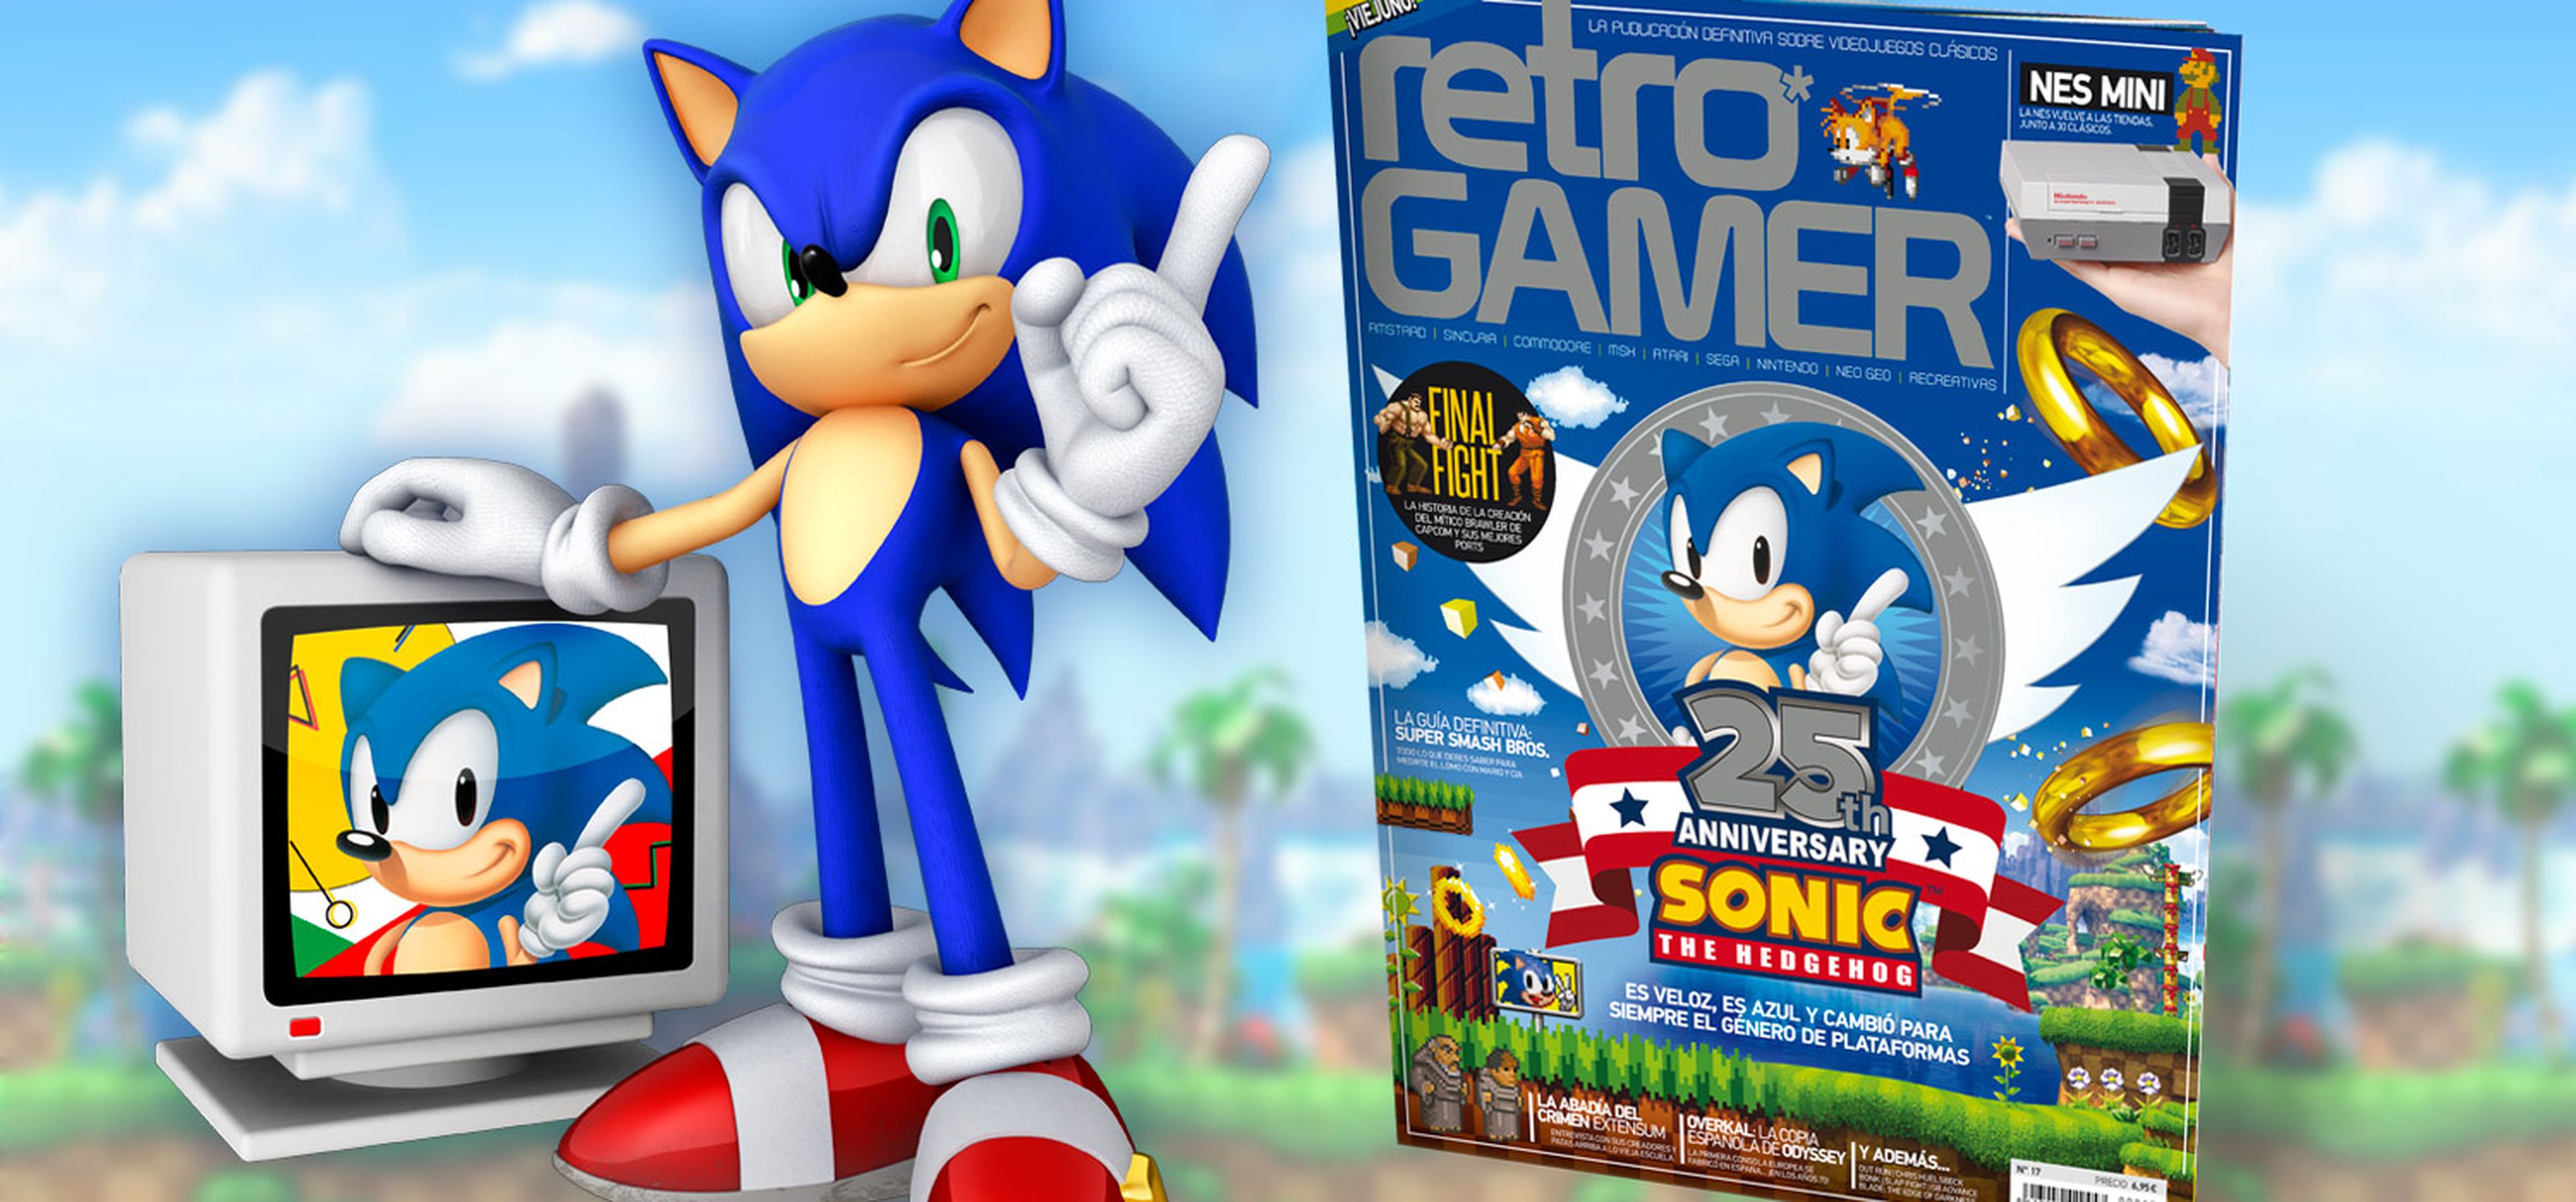 RetroGamer 17 celebra el 25 aniversario de Sonic